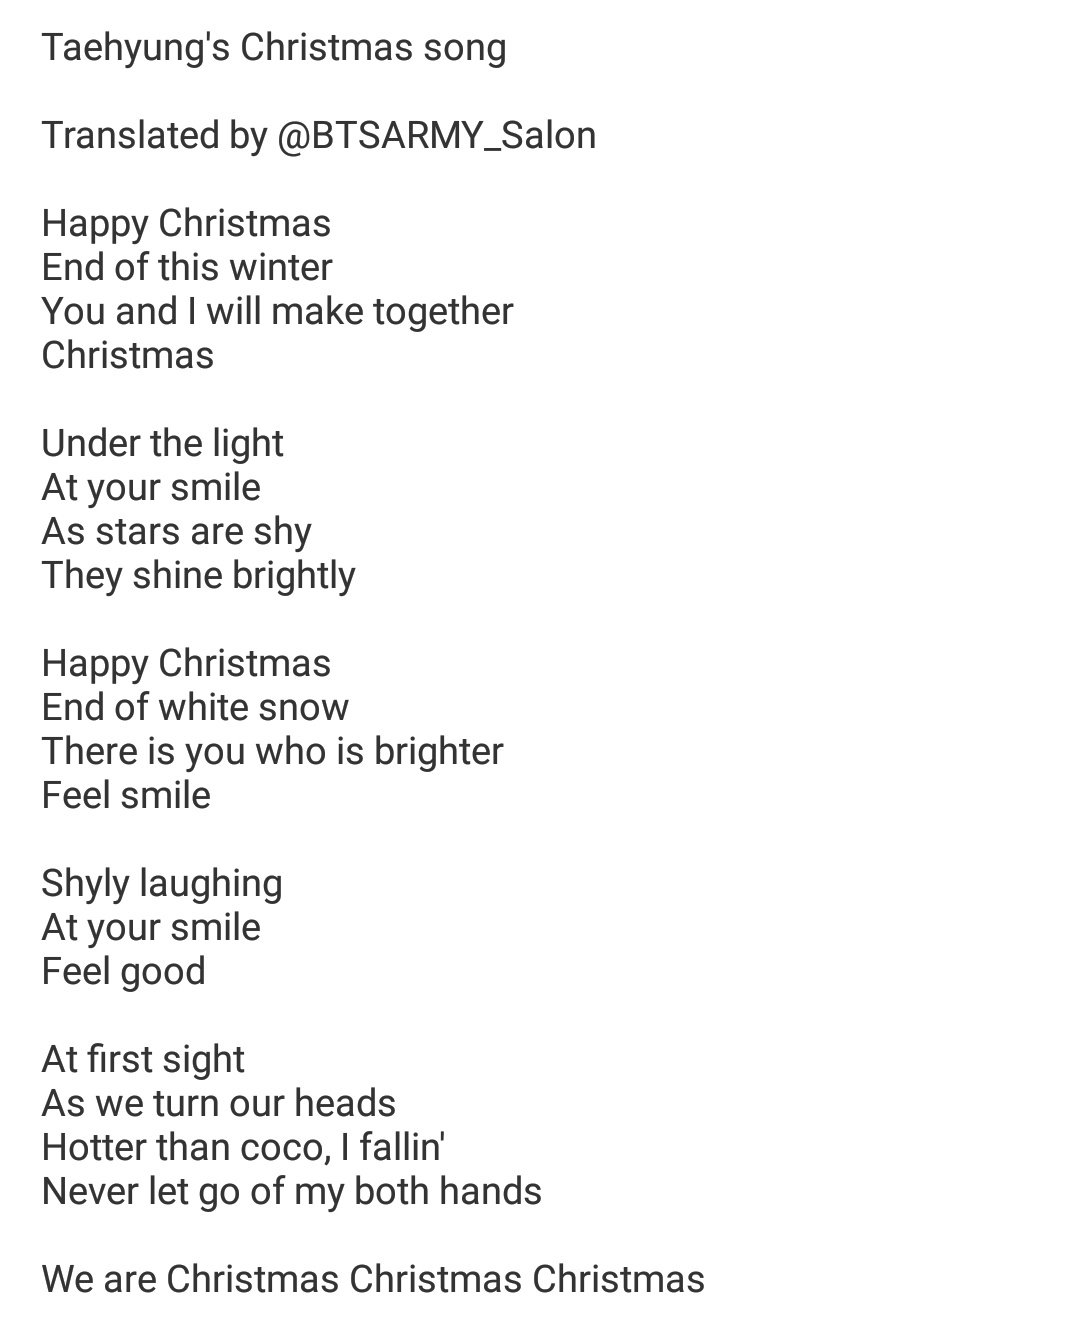 Хэппи Кристмас песня текст. This Christmas песня текст.